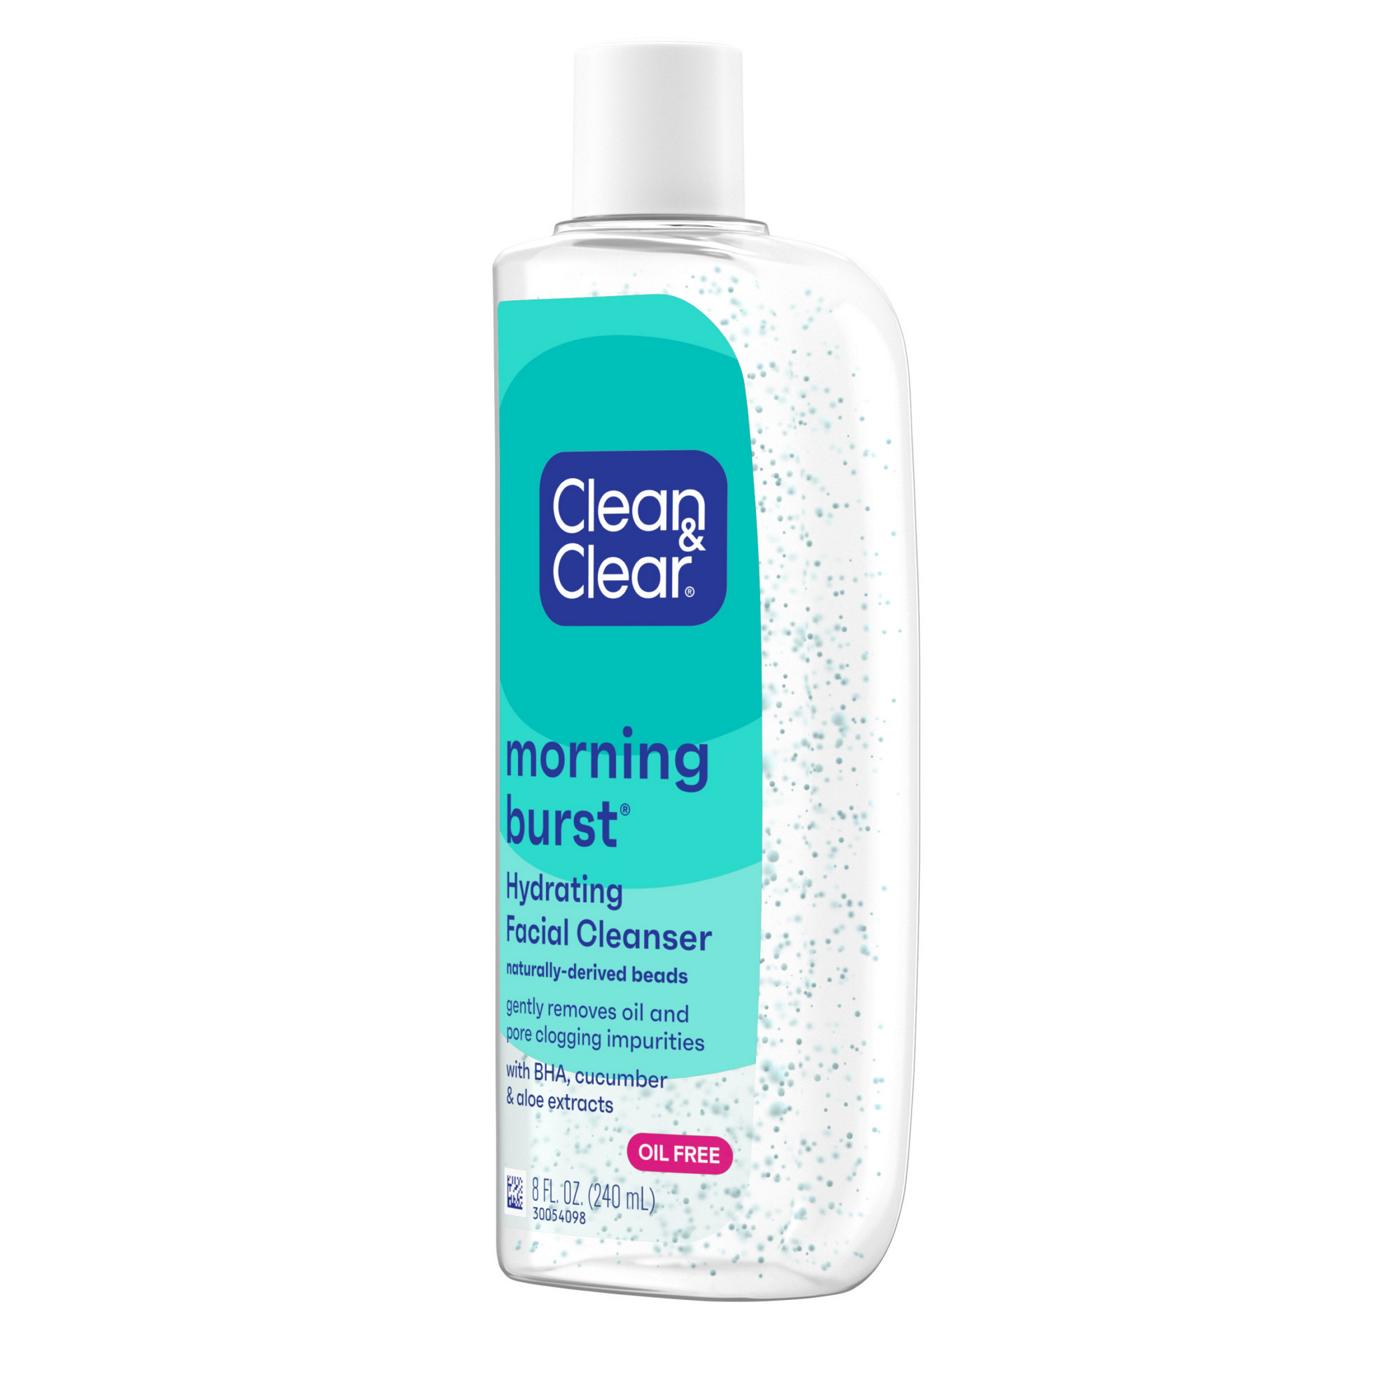 Clean & Clear Morning Burst Facial Cleanser - Shop Facial Cleansers &  Scrubs at H-E-B